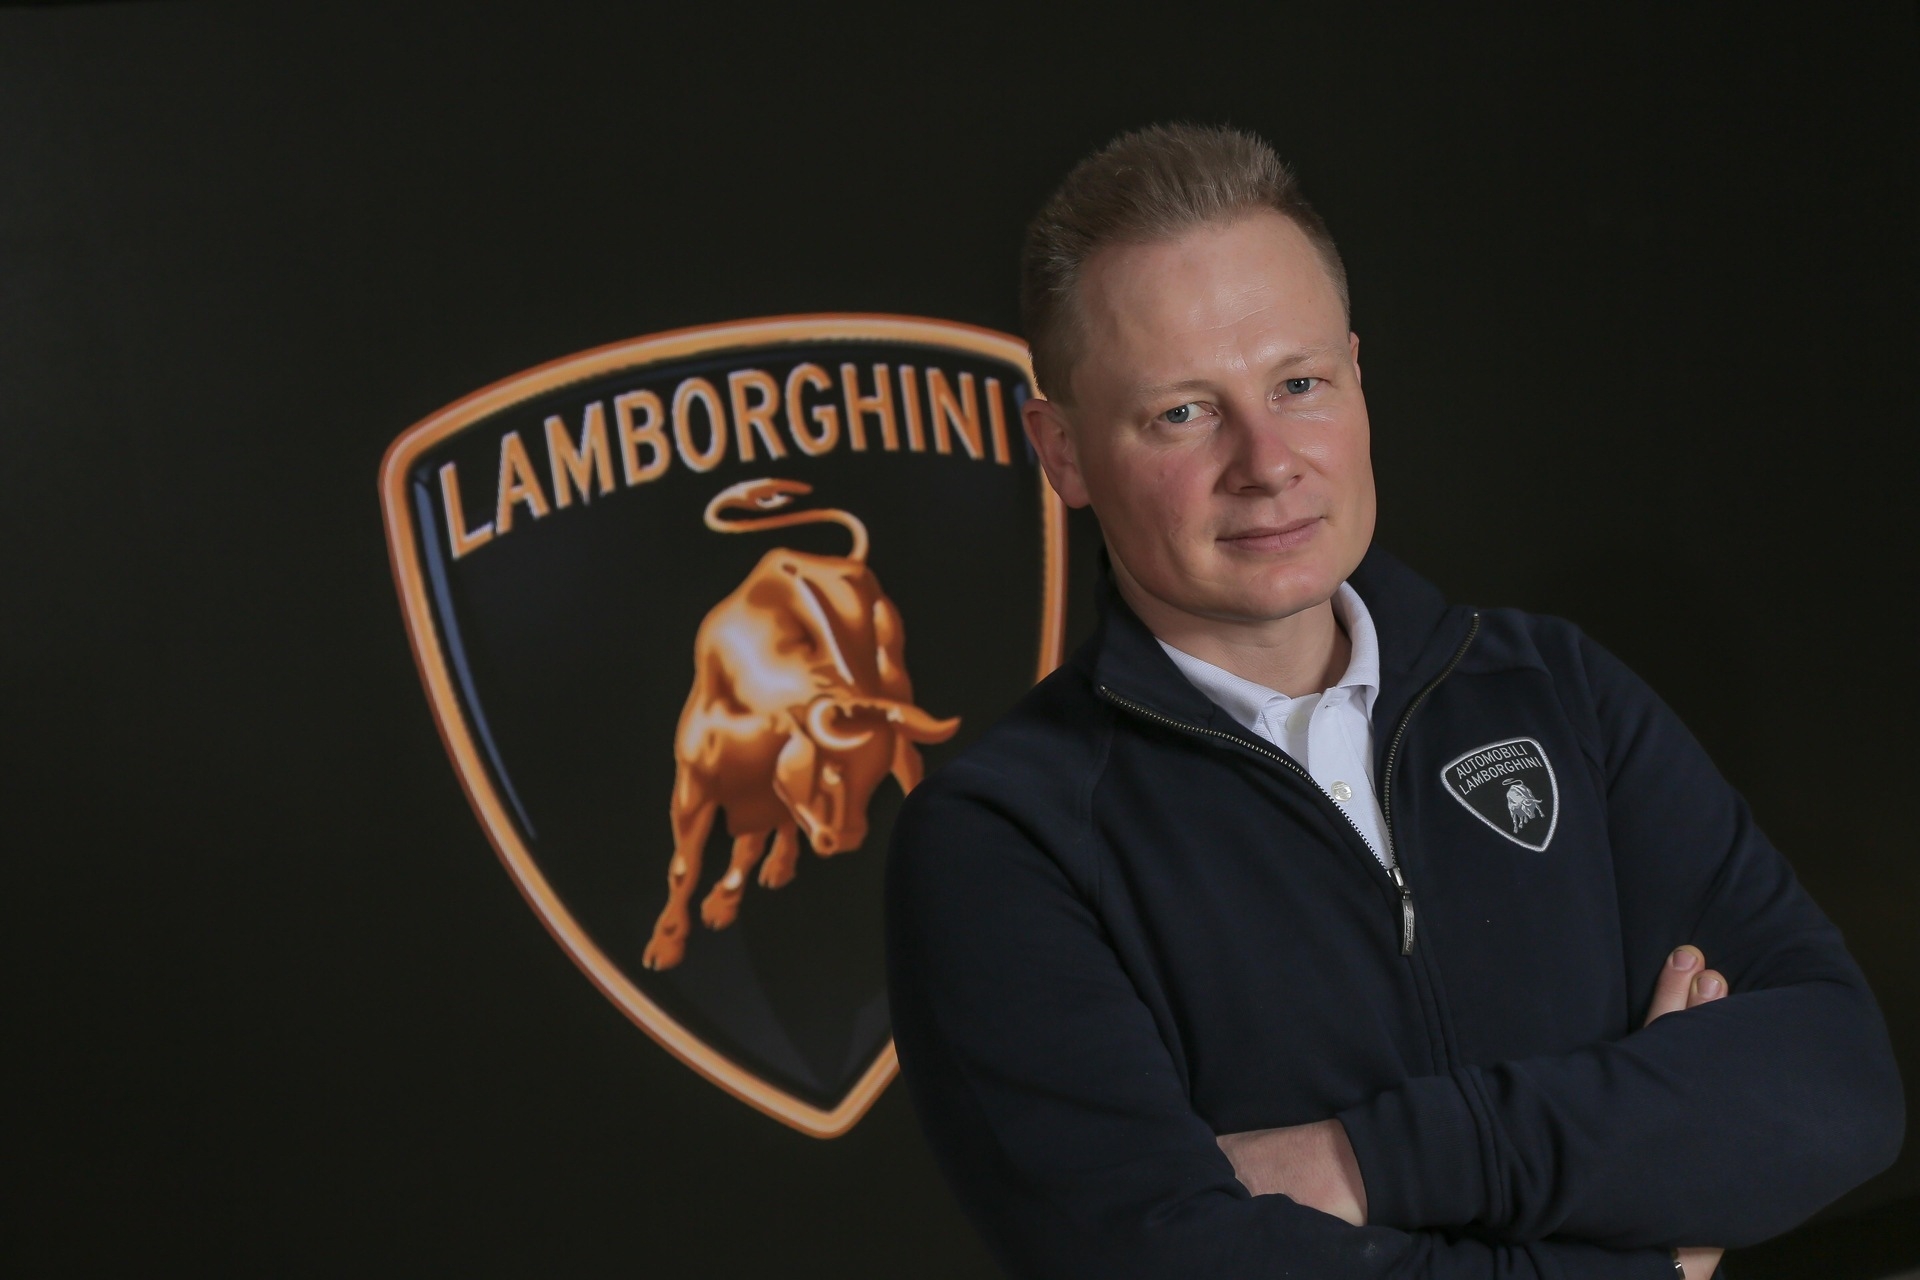 Lanzador: Mitja Borkert er designdirektør for Automobili Lamborghini